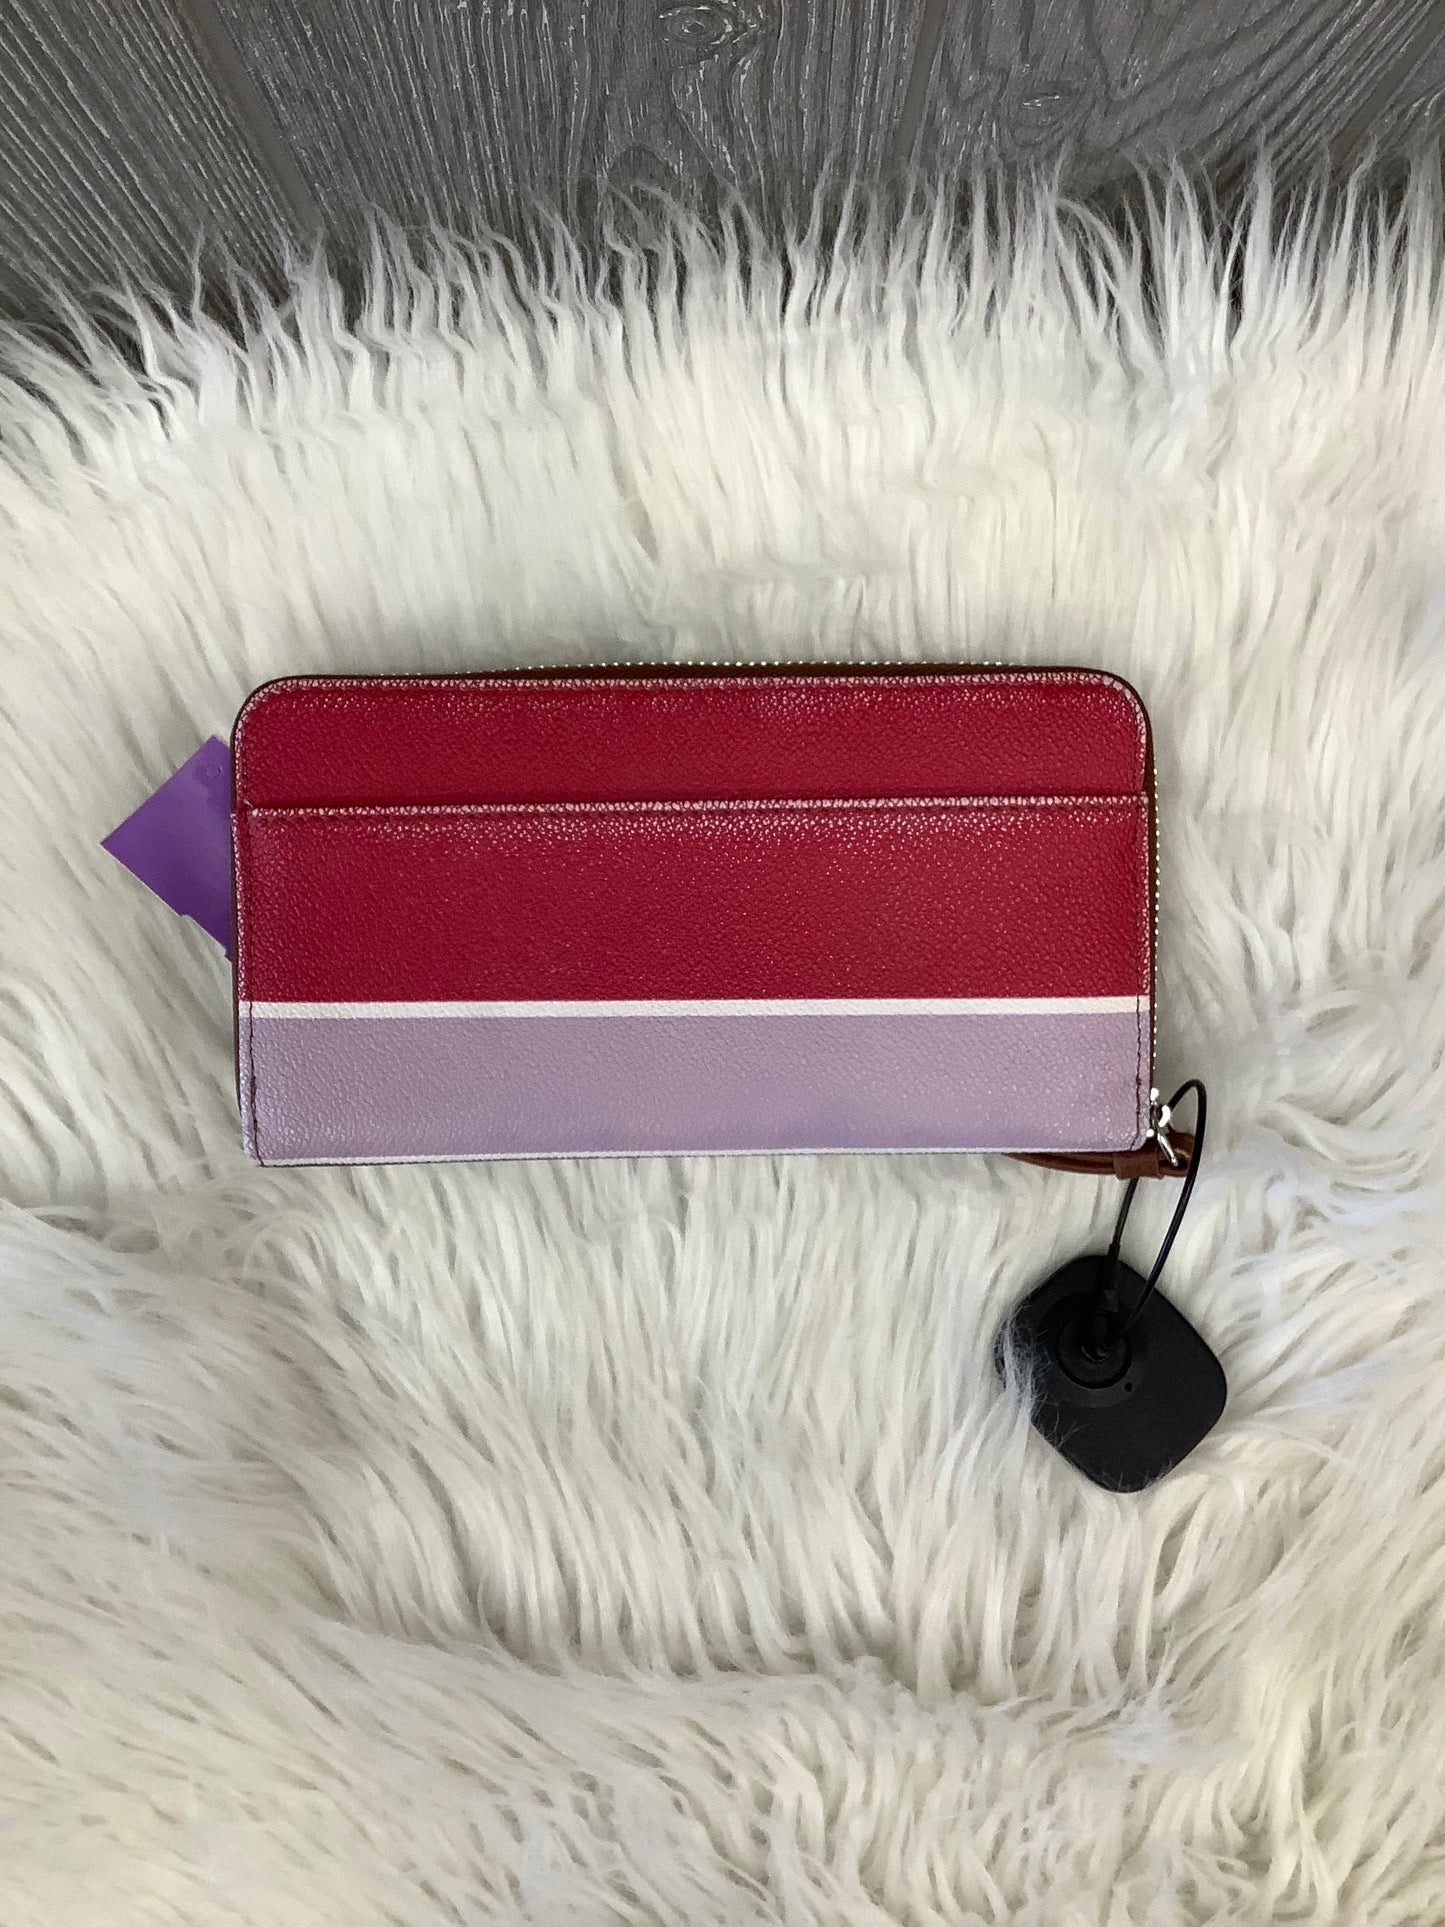 Wallet By Dana Buchman  Size: Medium